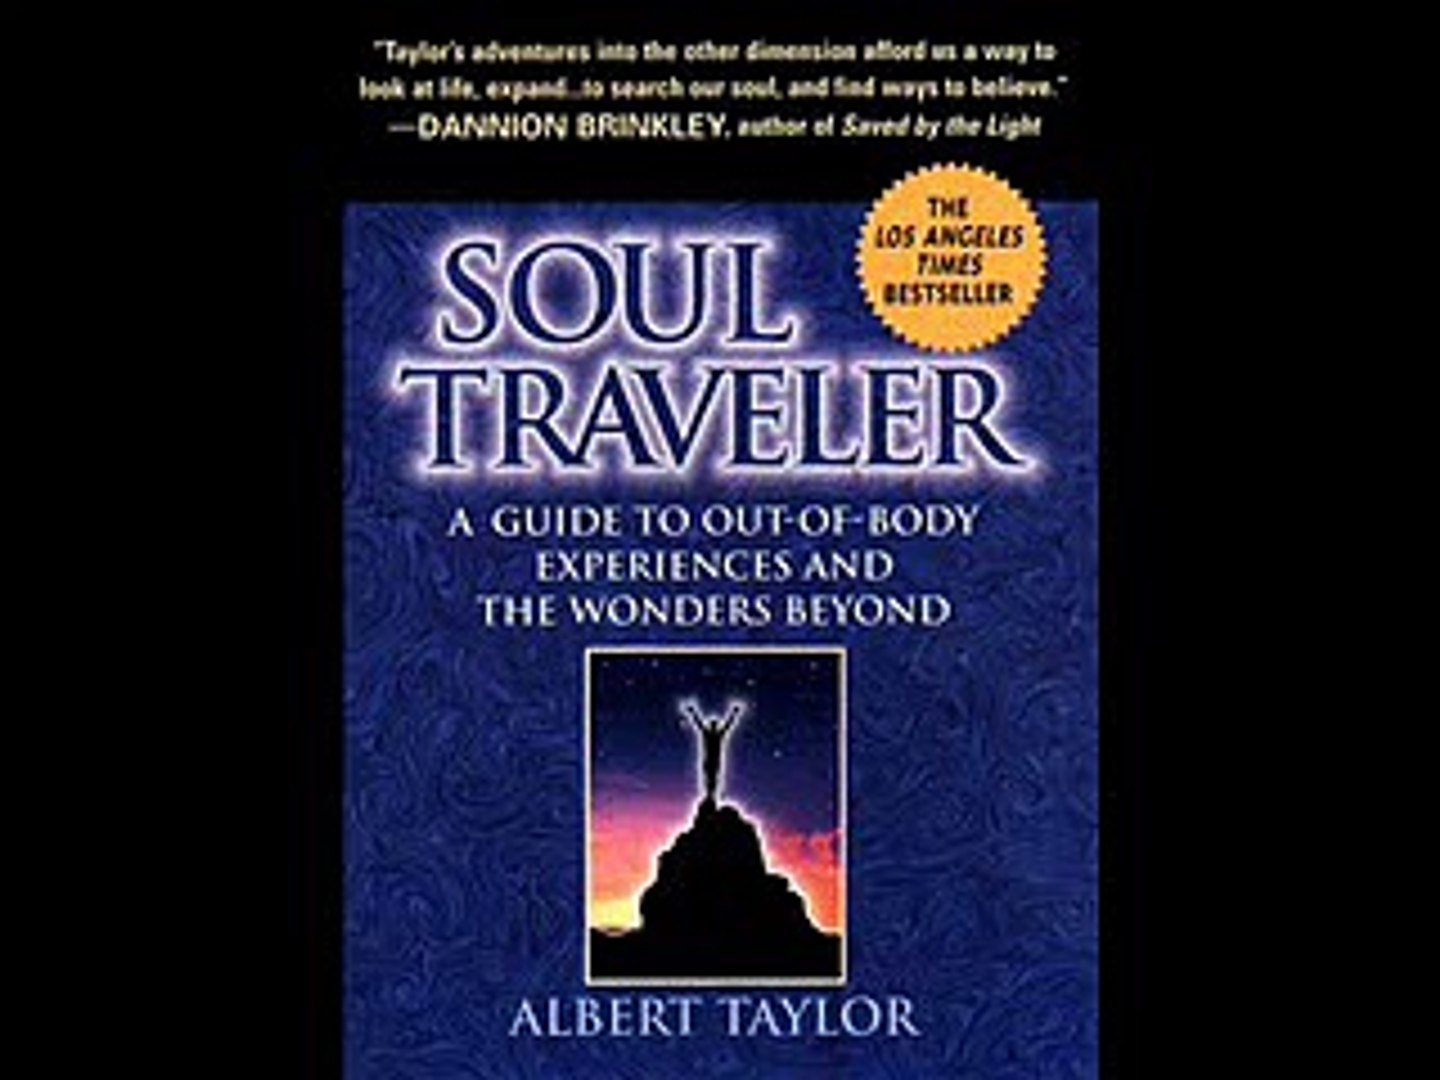 03 Albert Taylor Astral Travel (FAIR USE: Non-profit Educational)